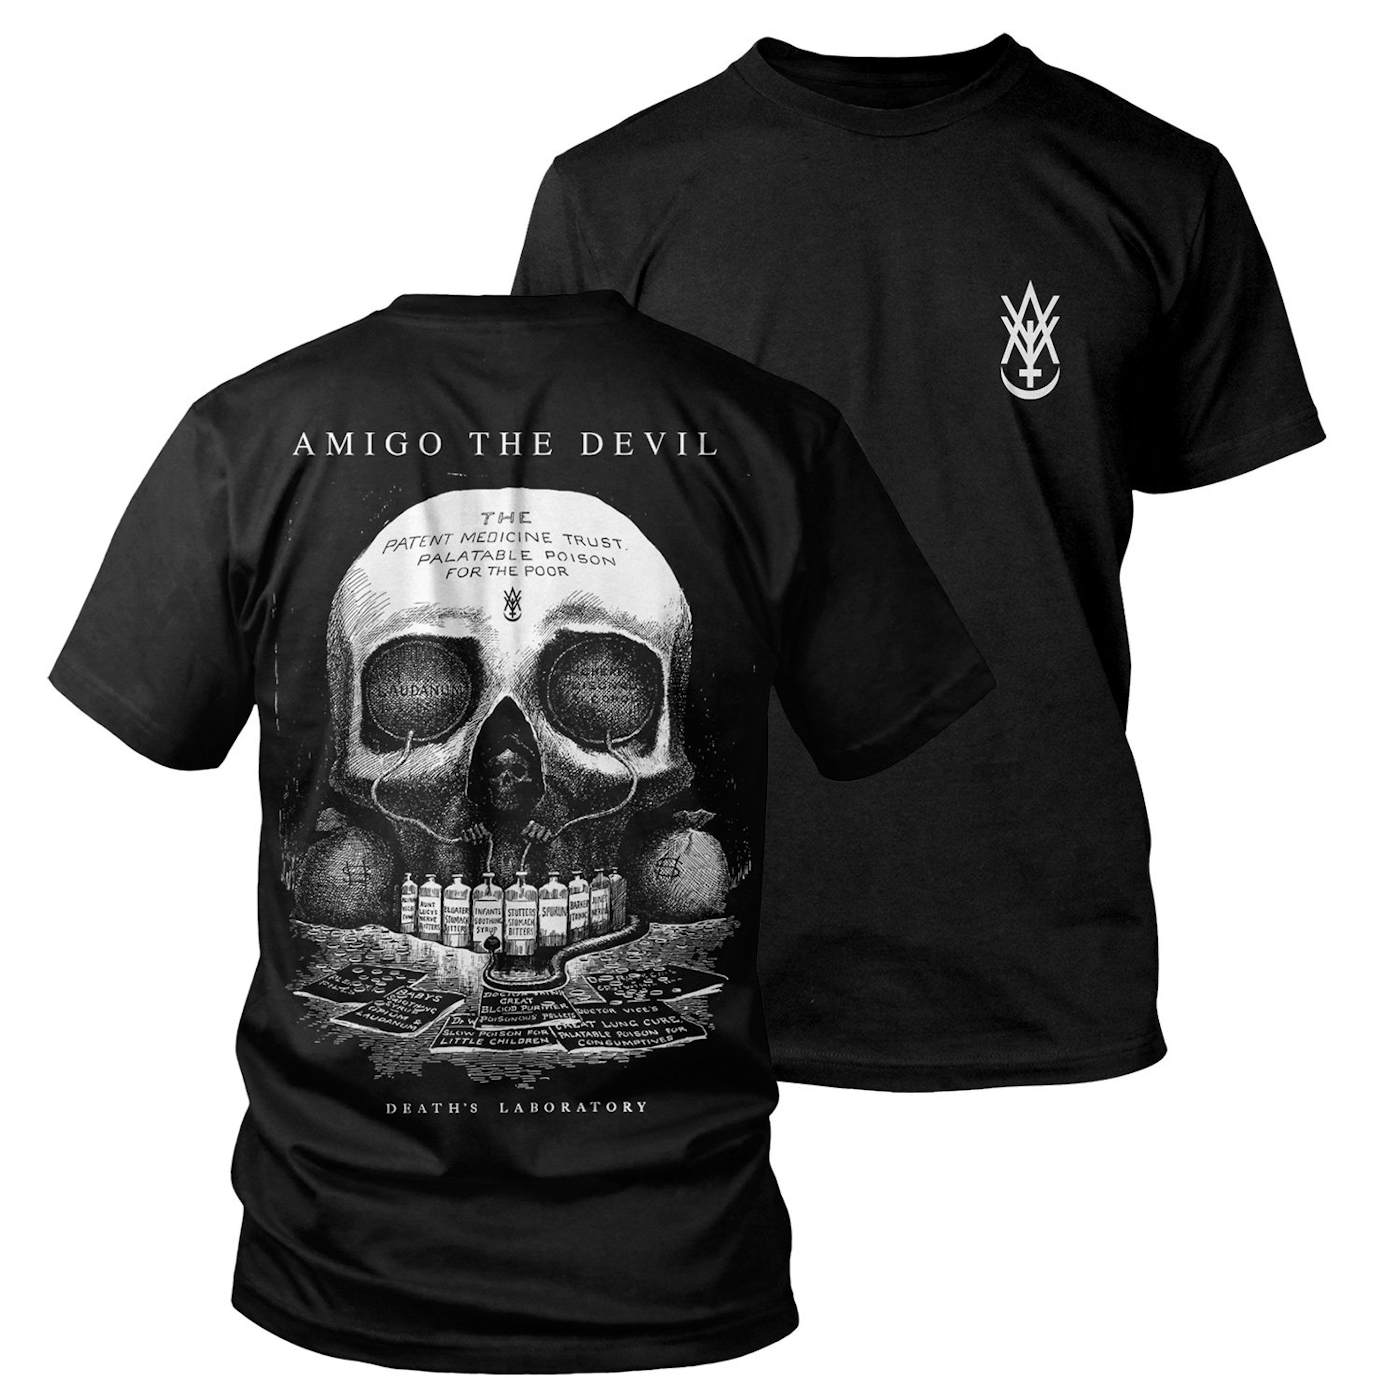 Amigo The Devil "Death's Laboratory" T-Shirt